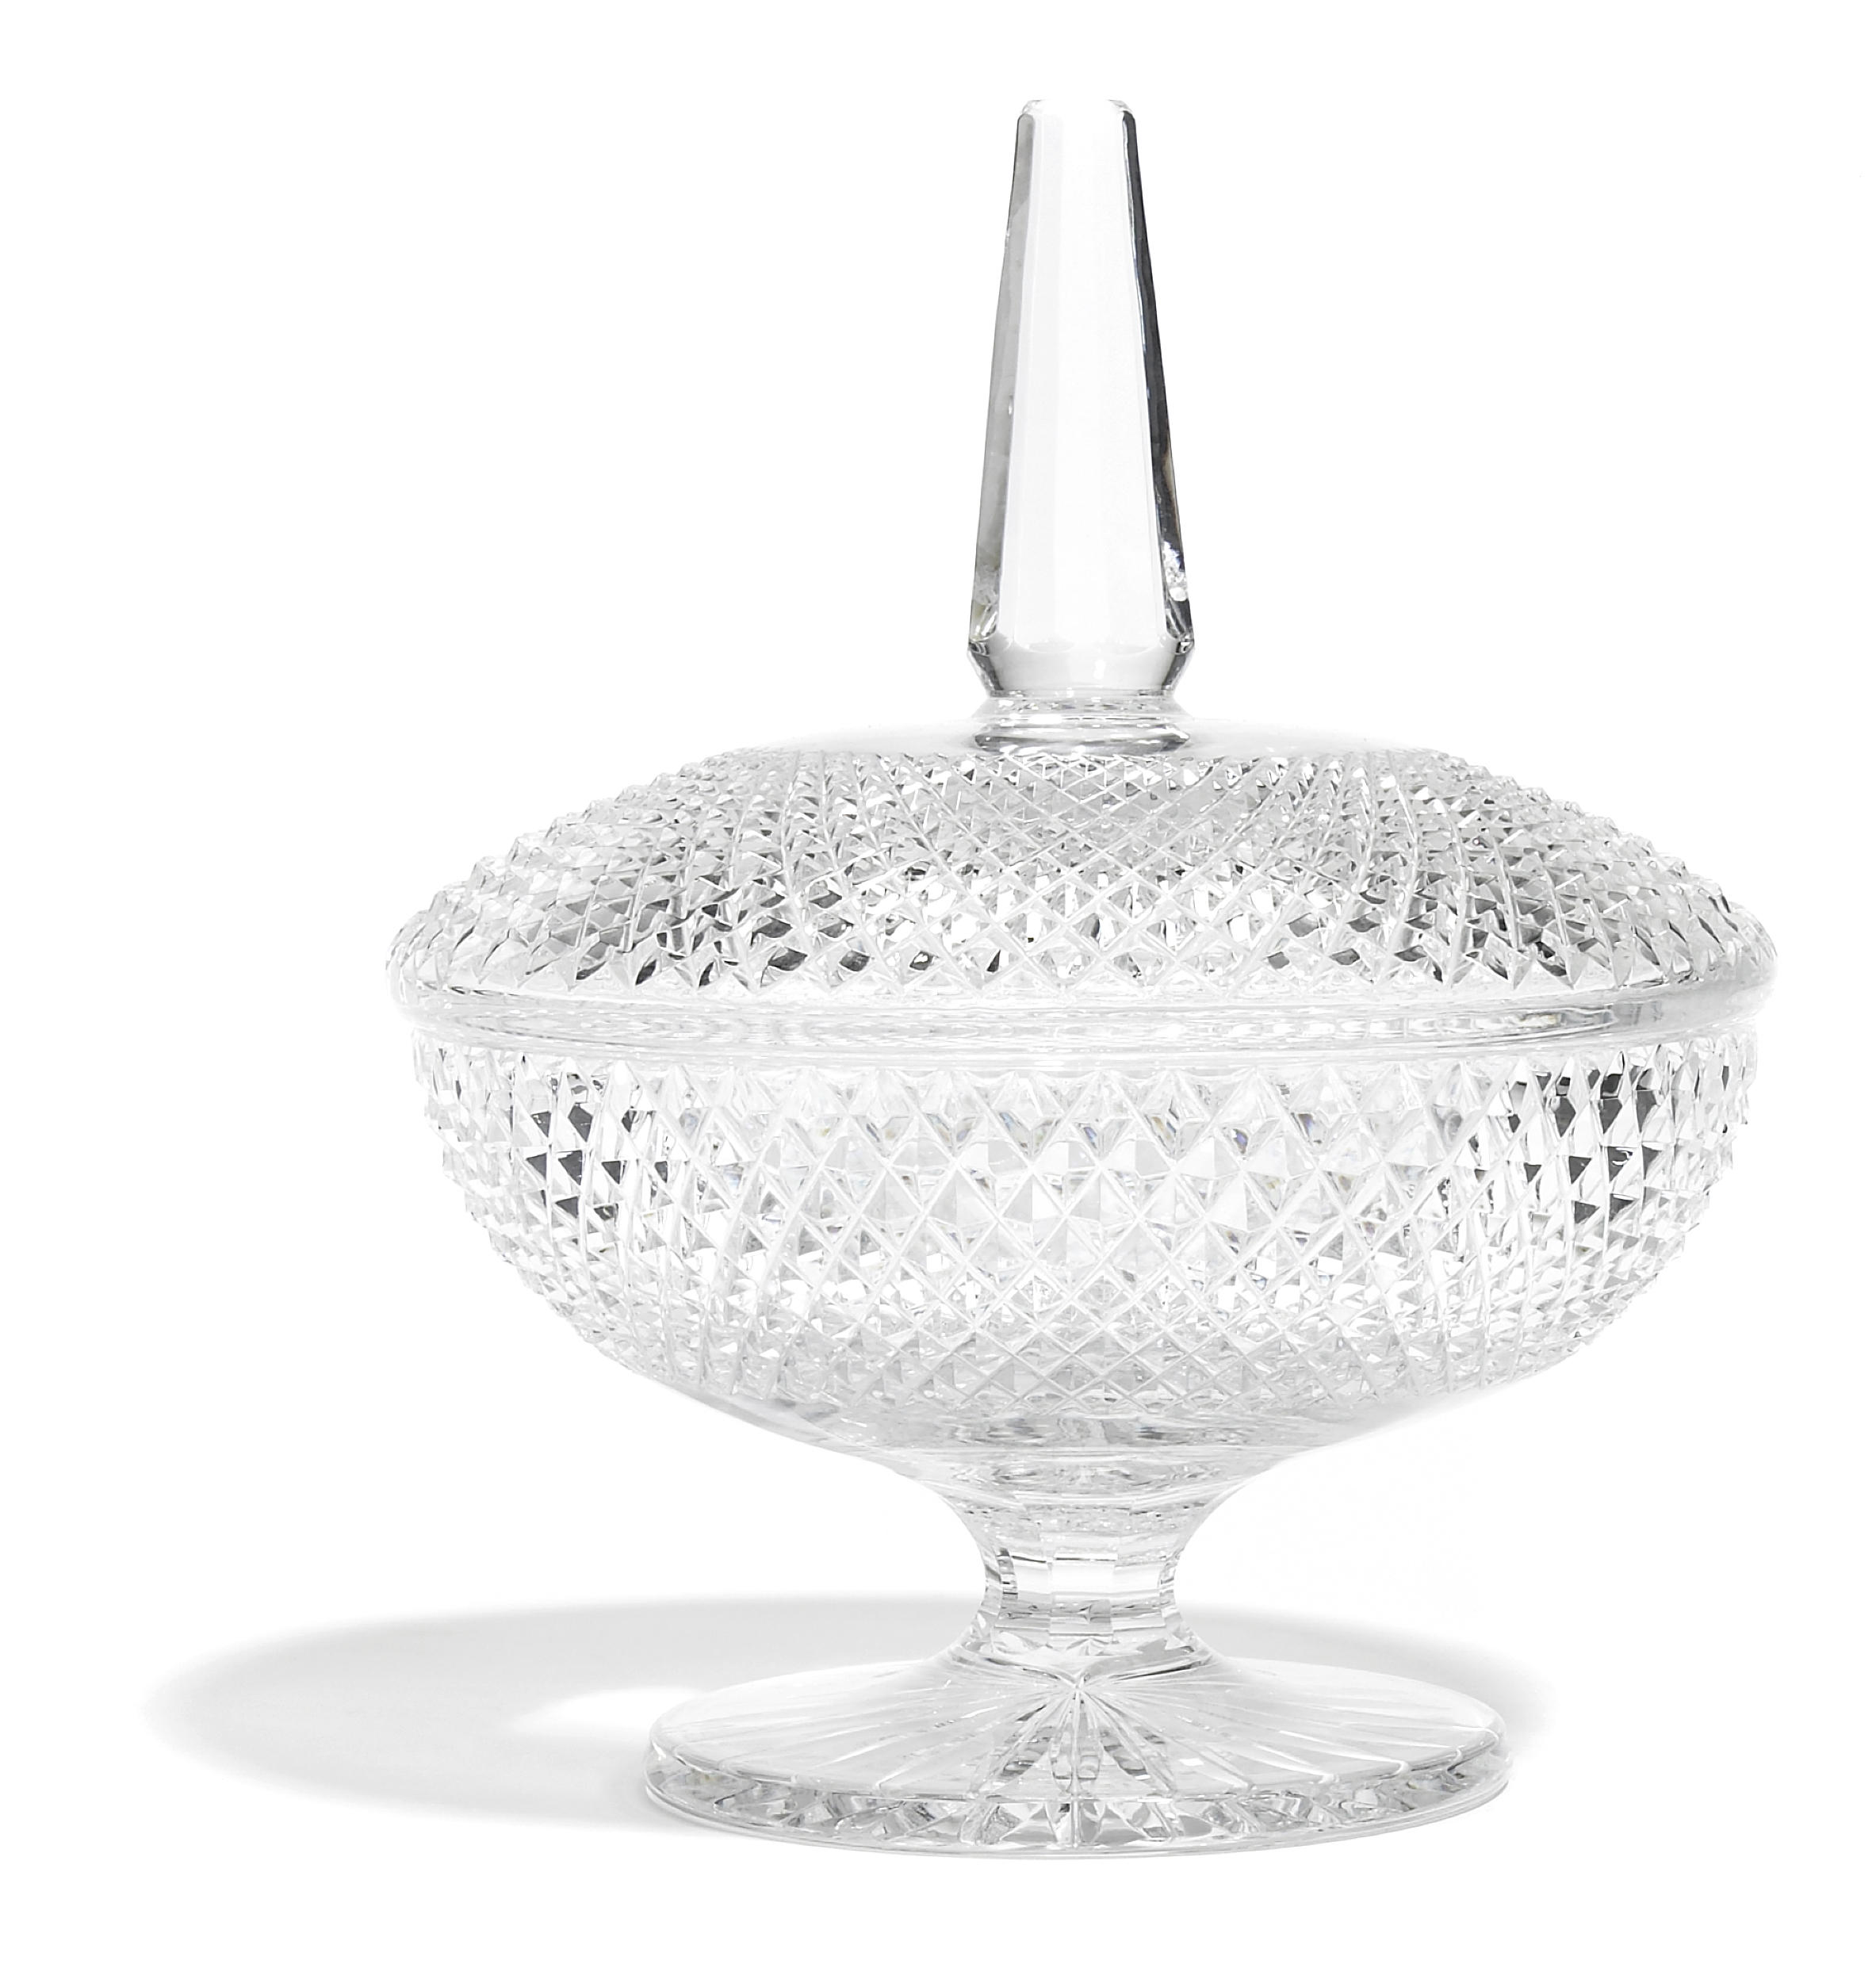 A cut glass covered pedestal bowl